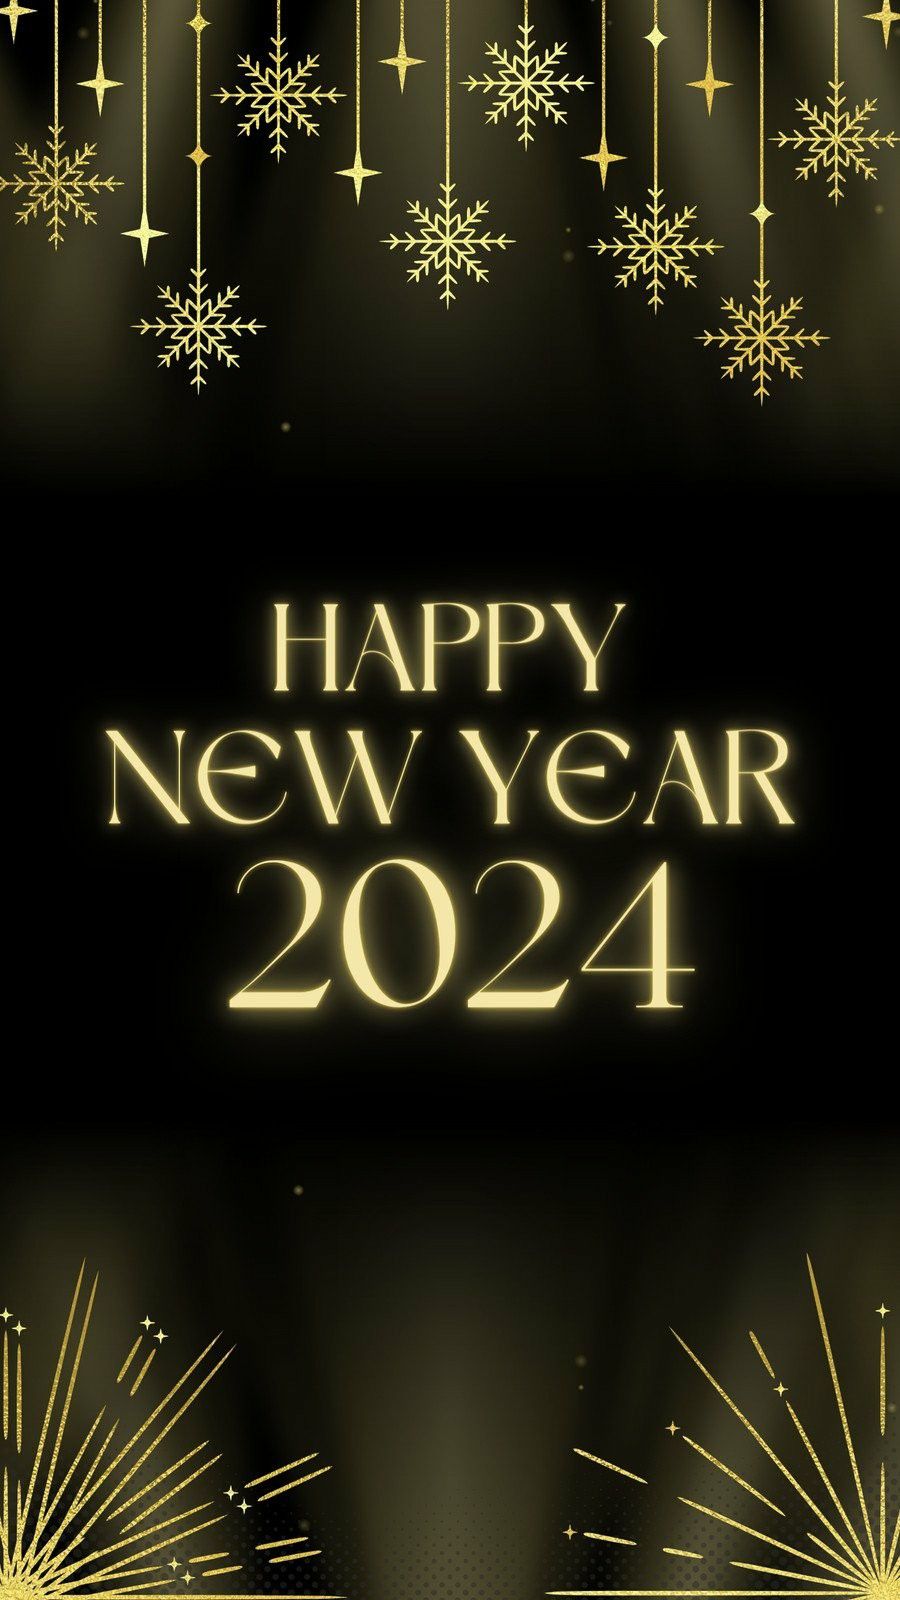 Happy New Year 2024. Happy new year picture, New year wishes image, Happy new year image